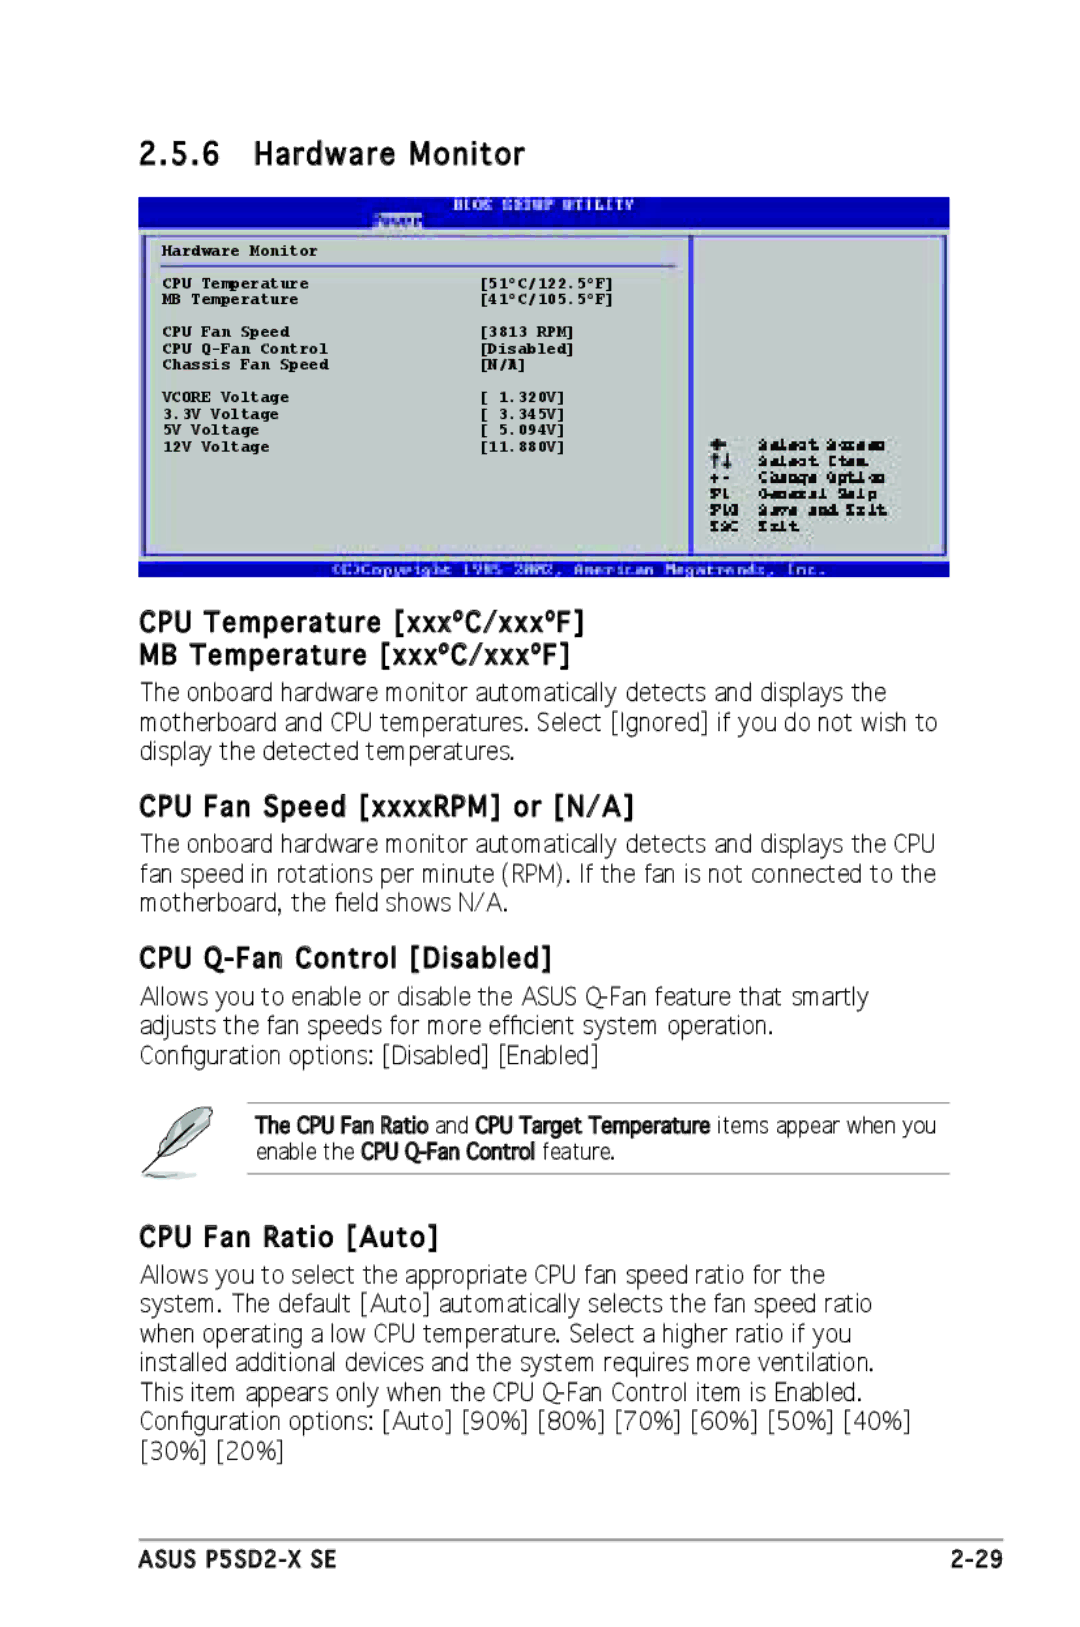 Asus P5SD2-X SE Hardware Monitor, CPU Temperature xxxºC/xxxºF MB Temperature xxxºC/xxxºF, CPU Fan Speed xxxxRPM or N/A 